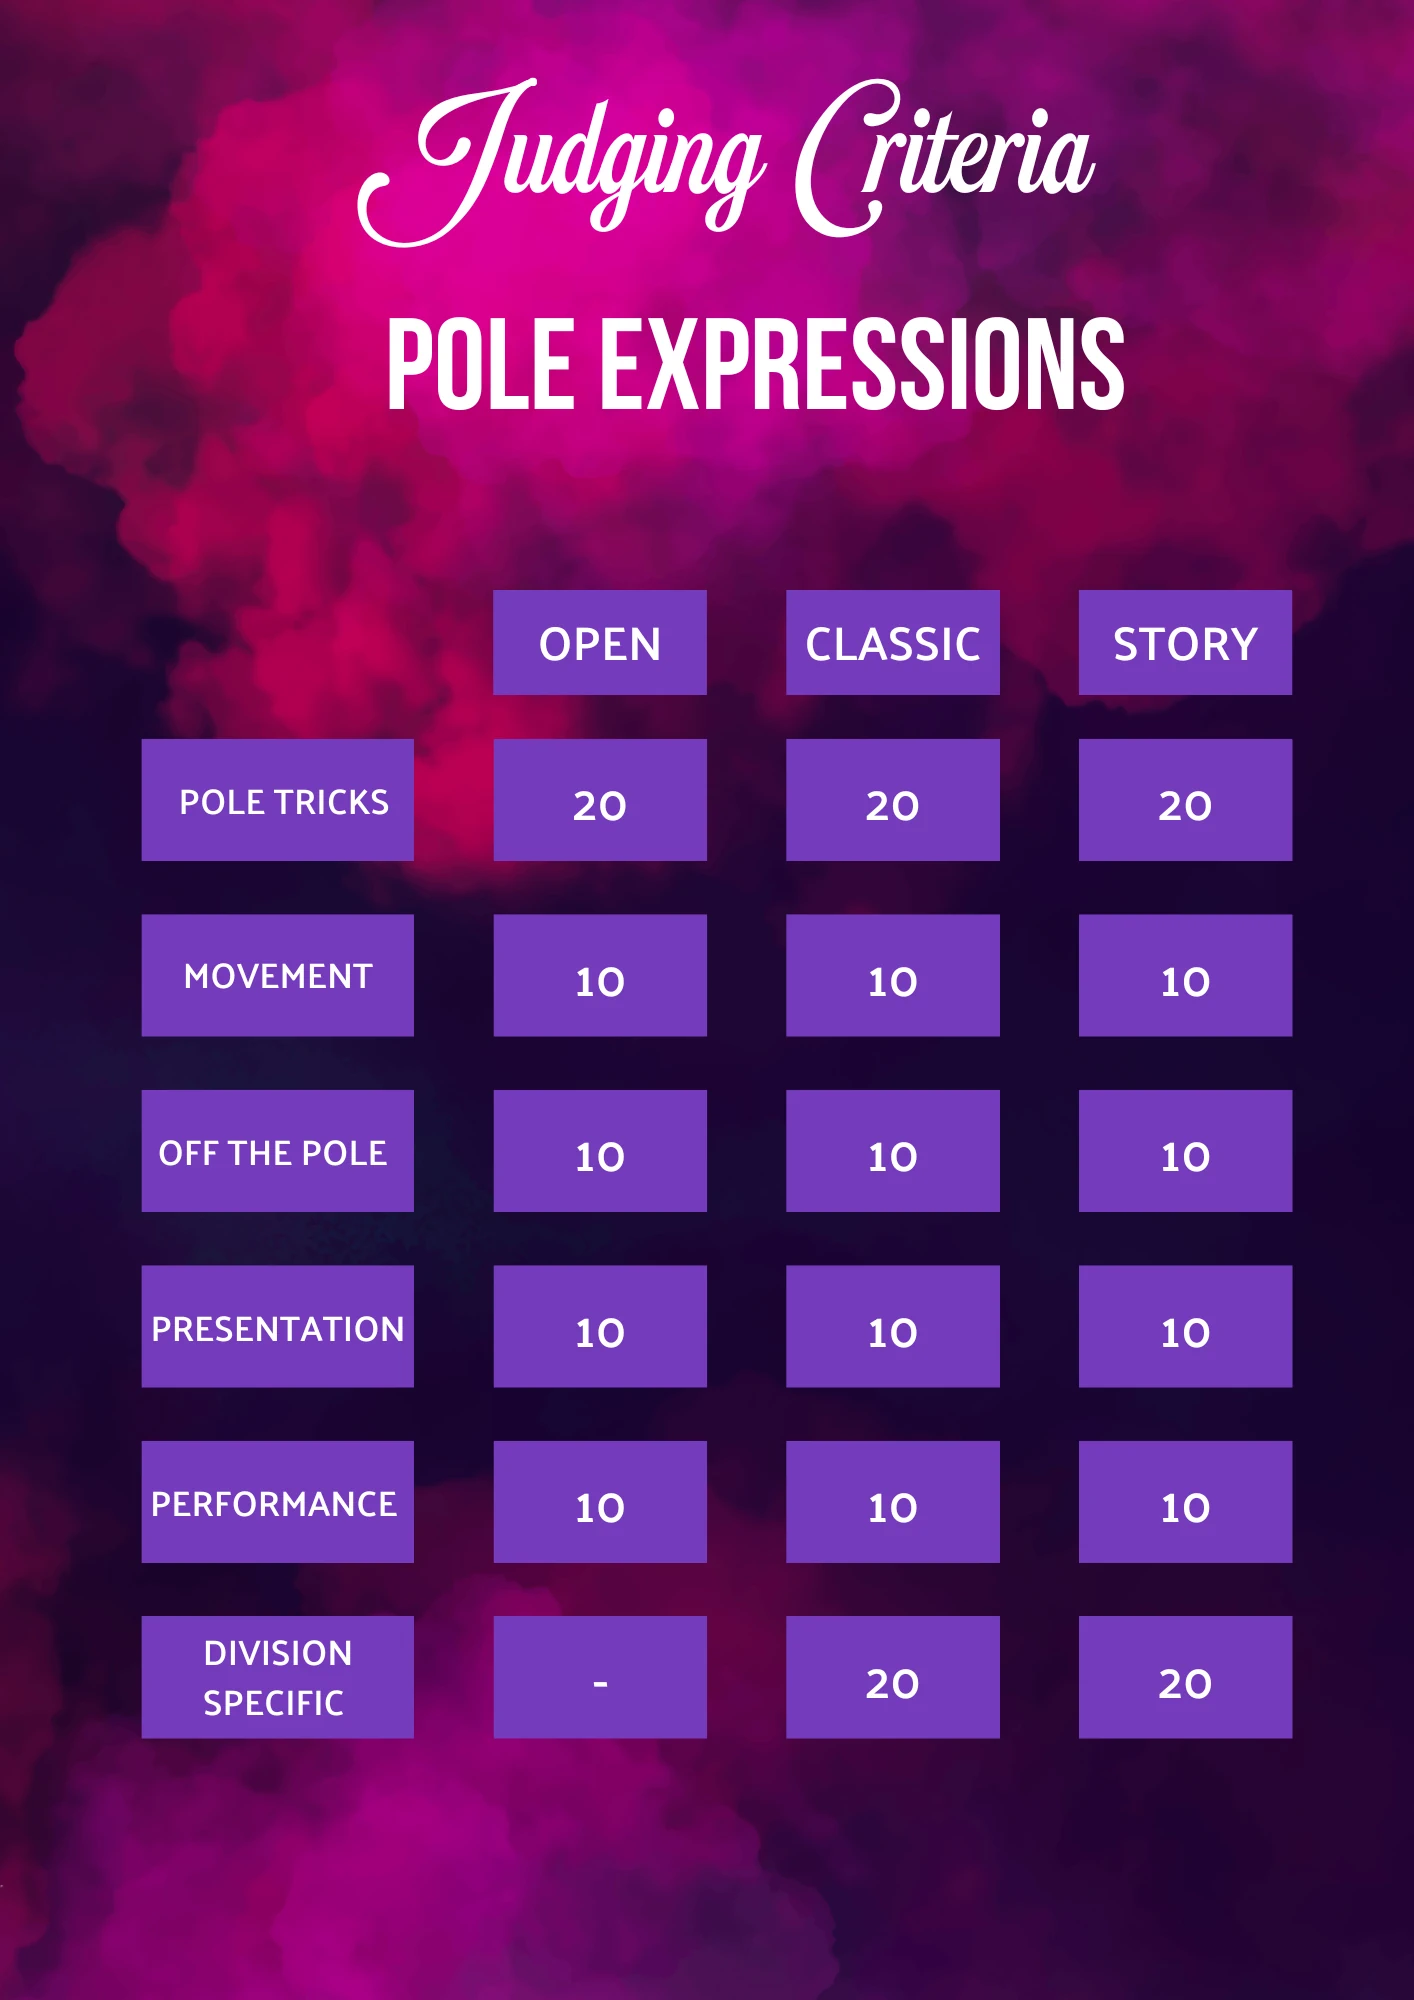 Pole expressions judging criteria